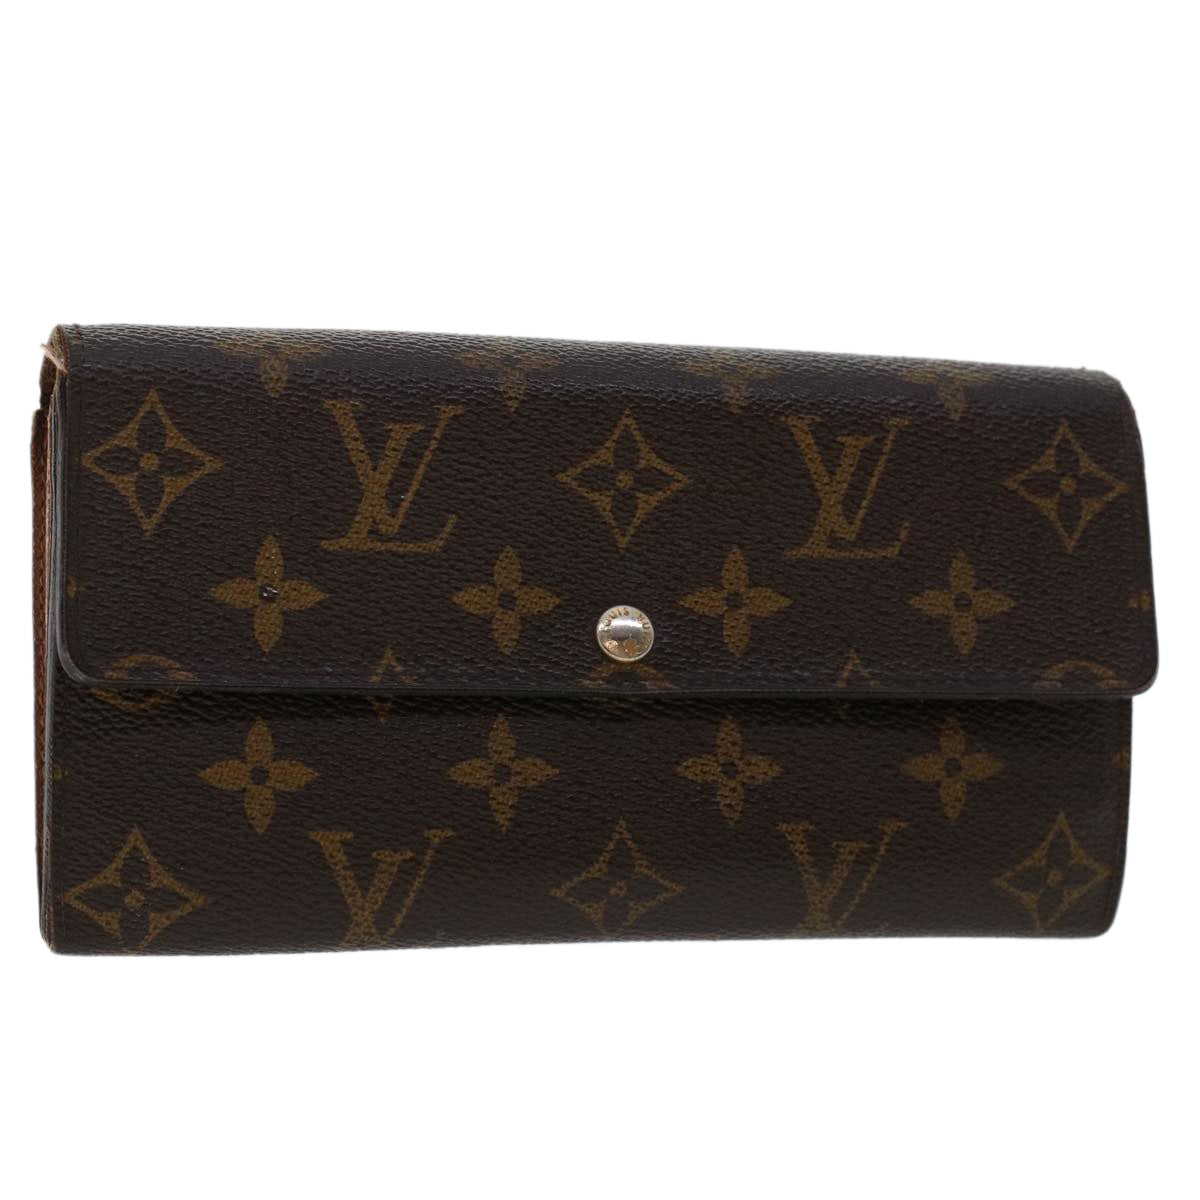 Shop Louis Vuitton PORTEFEUILLE SARAH LV SARAH WALLET Monogram